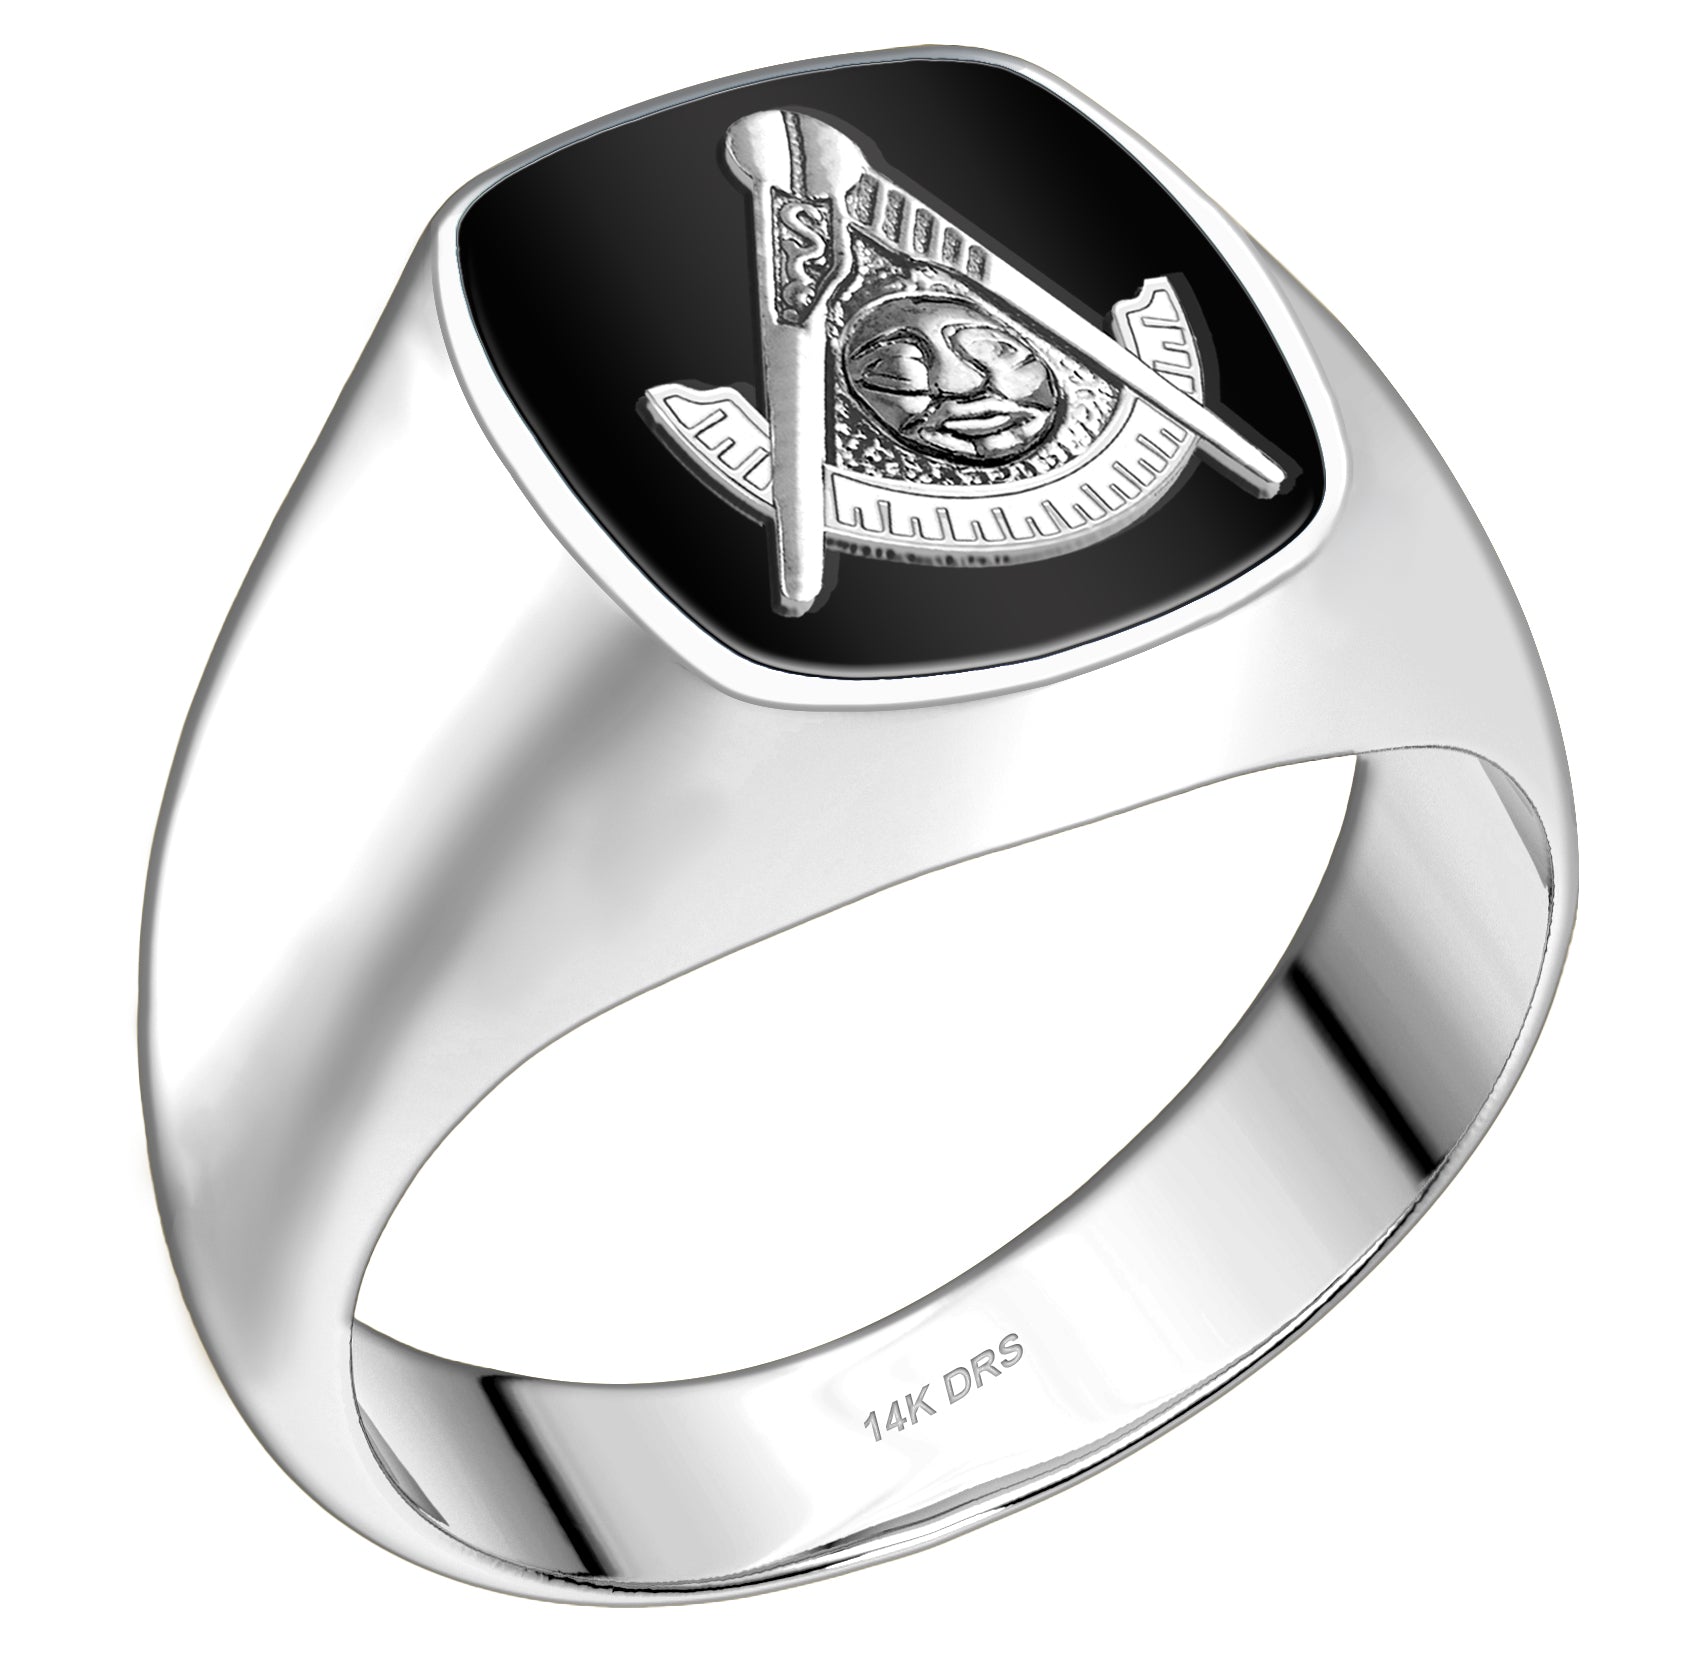 US Jewels Masonic Customizable Men's 14k or 10k Gold Masonic Rings - US Jewels